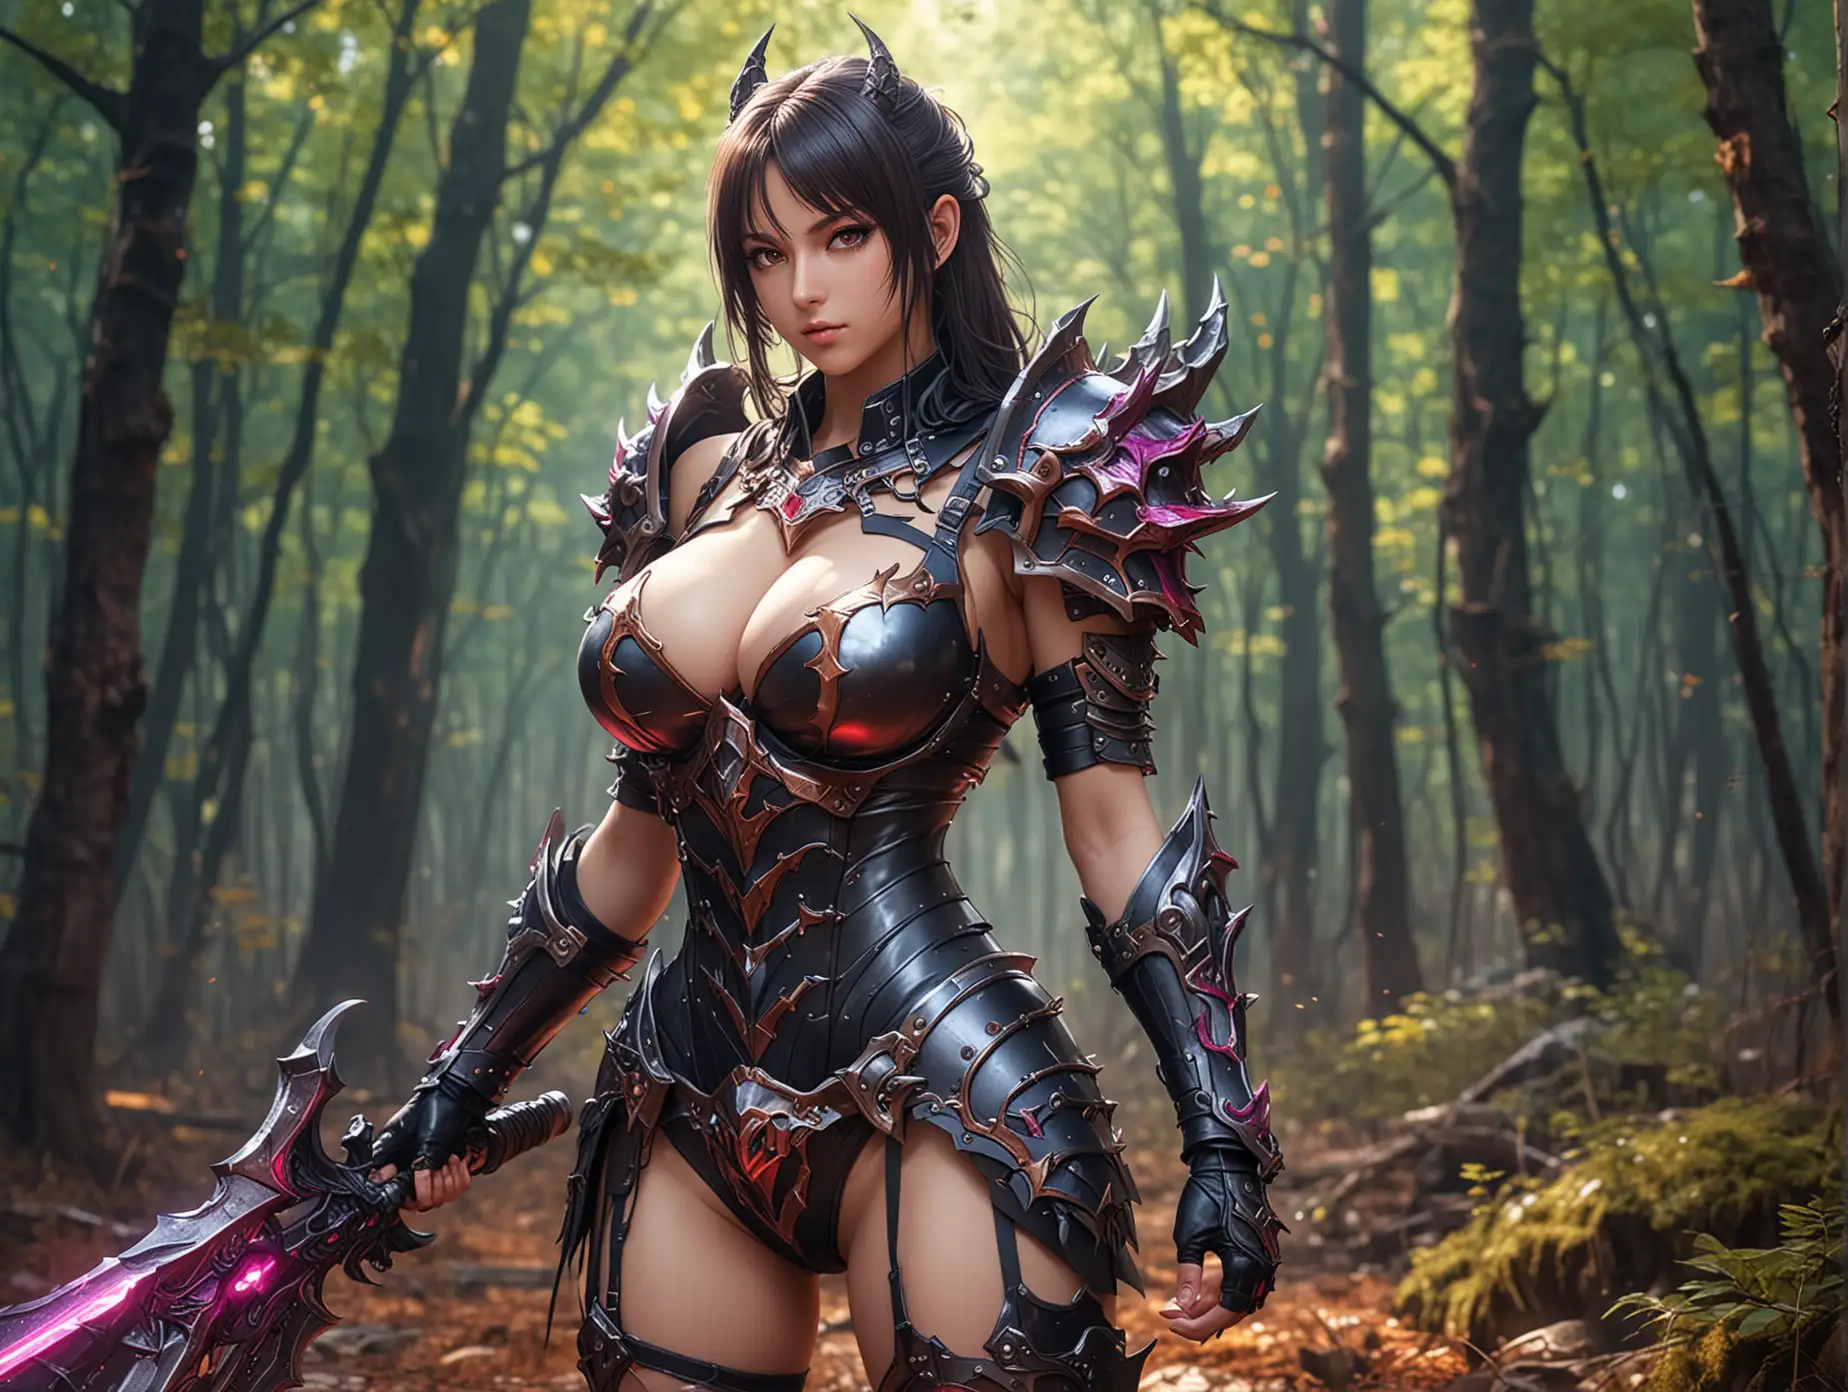 Anime Demon Girl in Vibrant Battle Armor Amidst Enchanted Forest